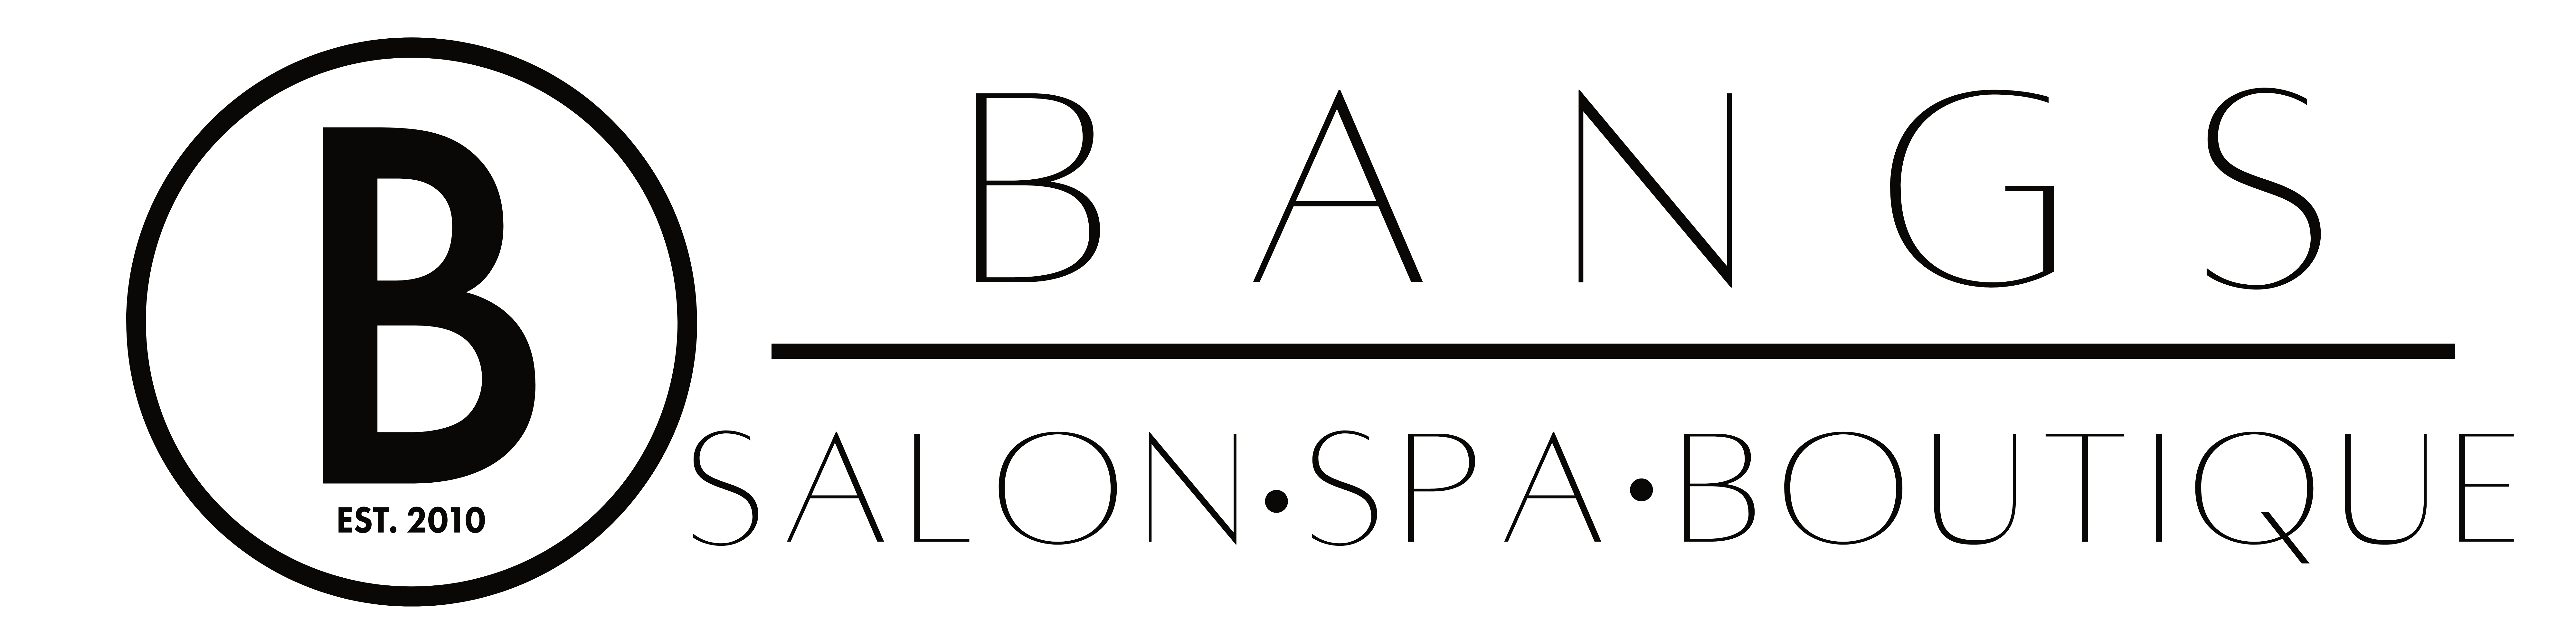 Bangs Salon, Spa & Boutique